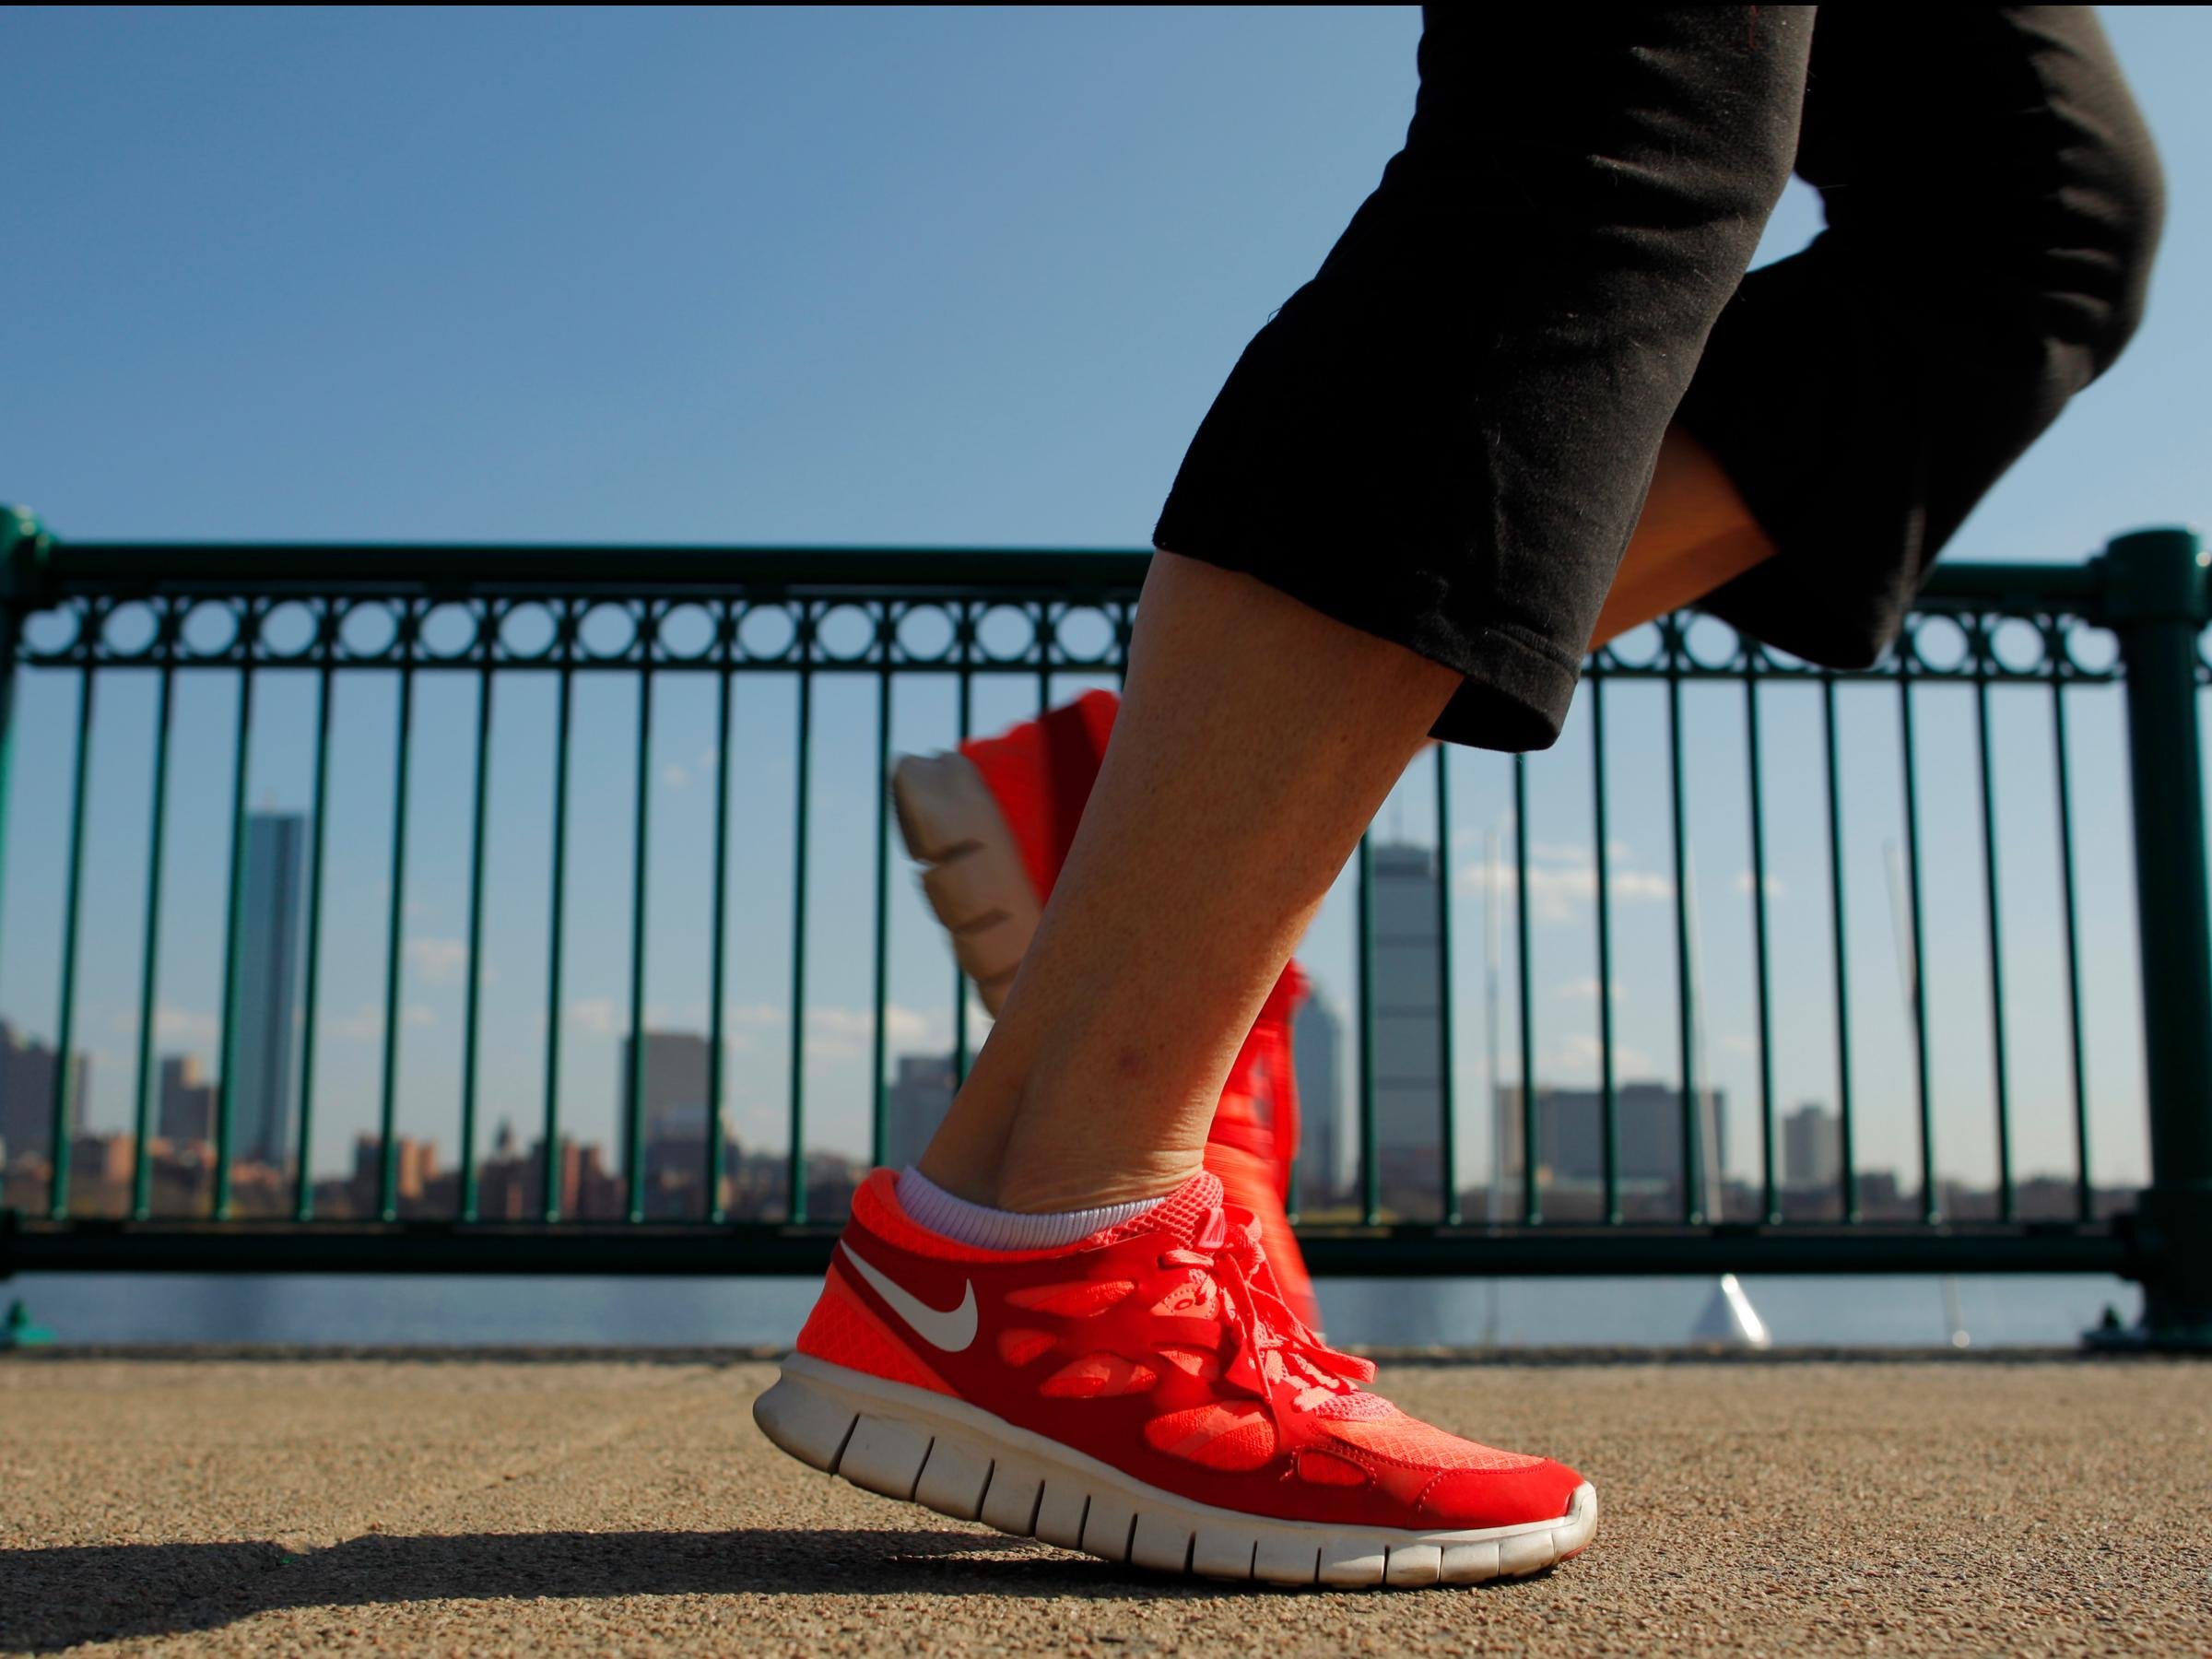 Фото кроссовок на ногах. Nike Running Shoes. Кроссовки на ногах. Кроссовки фон. Кроссовки на человеке.